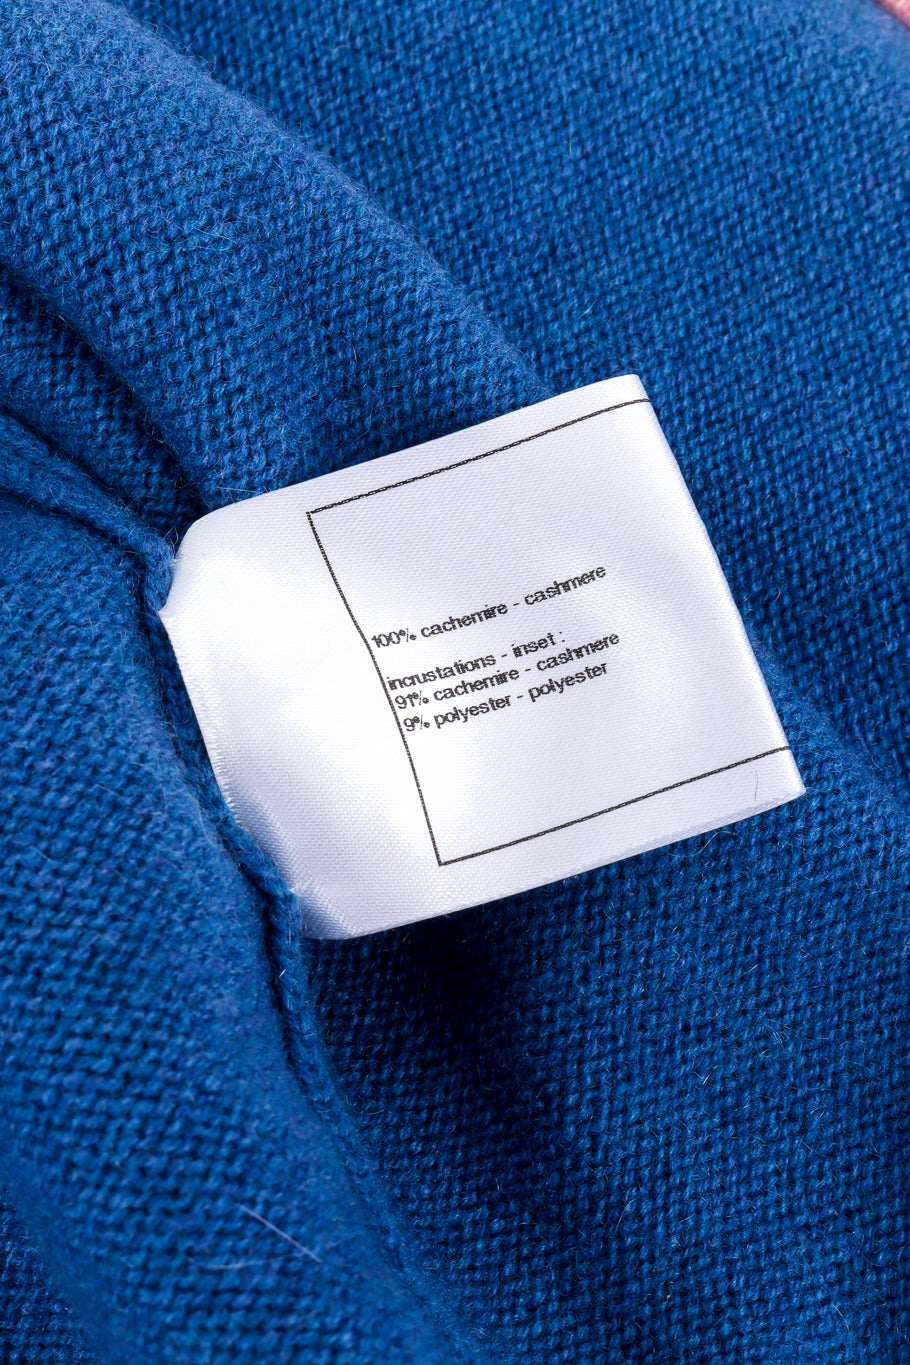 Chanel Cashmere Sweater content label @recess la